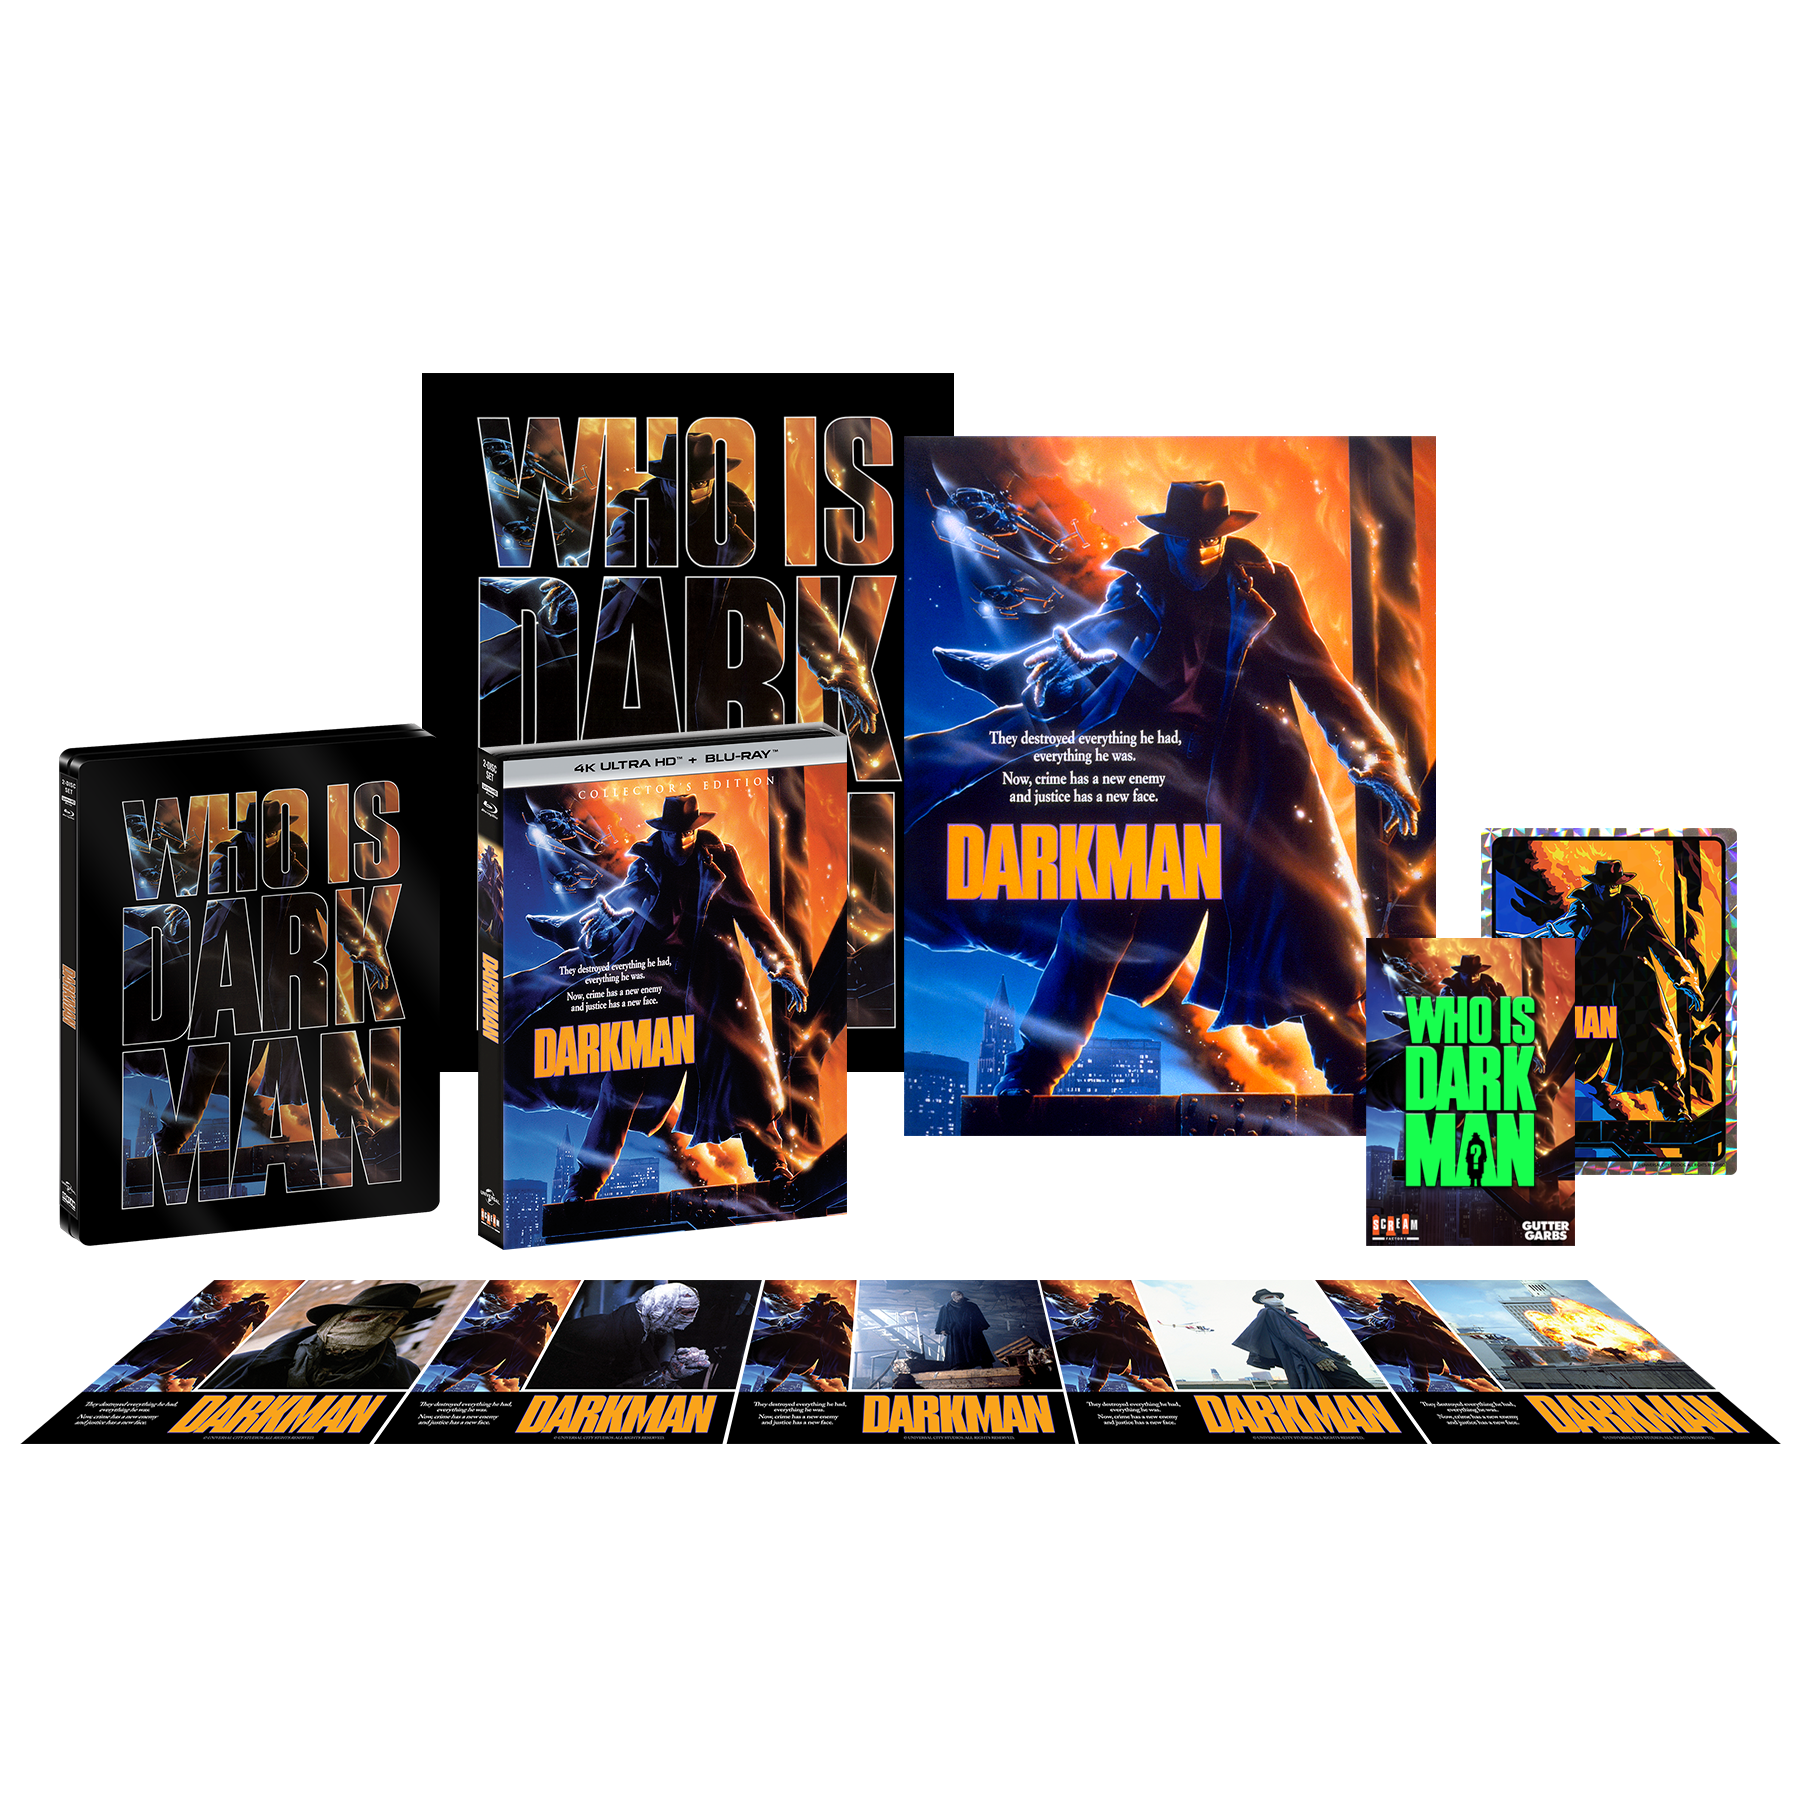 Darkman [Collector's Edition] + [Limited Edition Steelbook] + Pin + Pr –  Shout! Factory